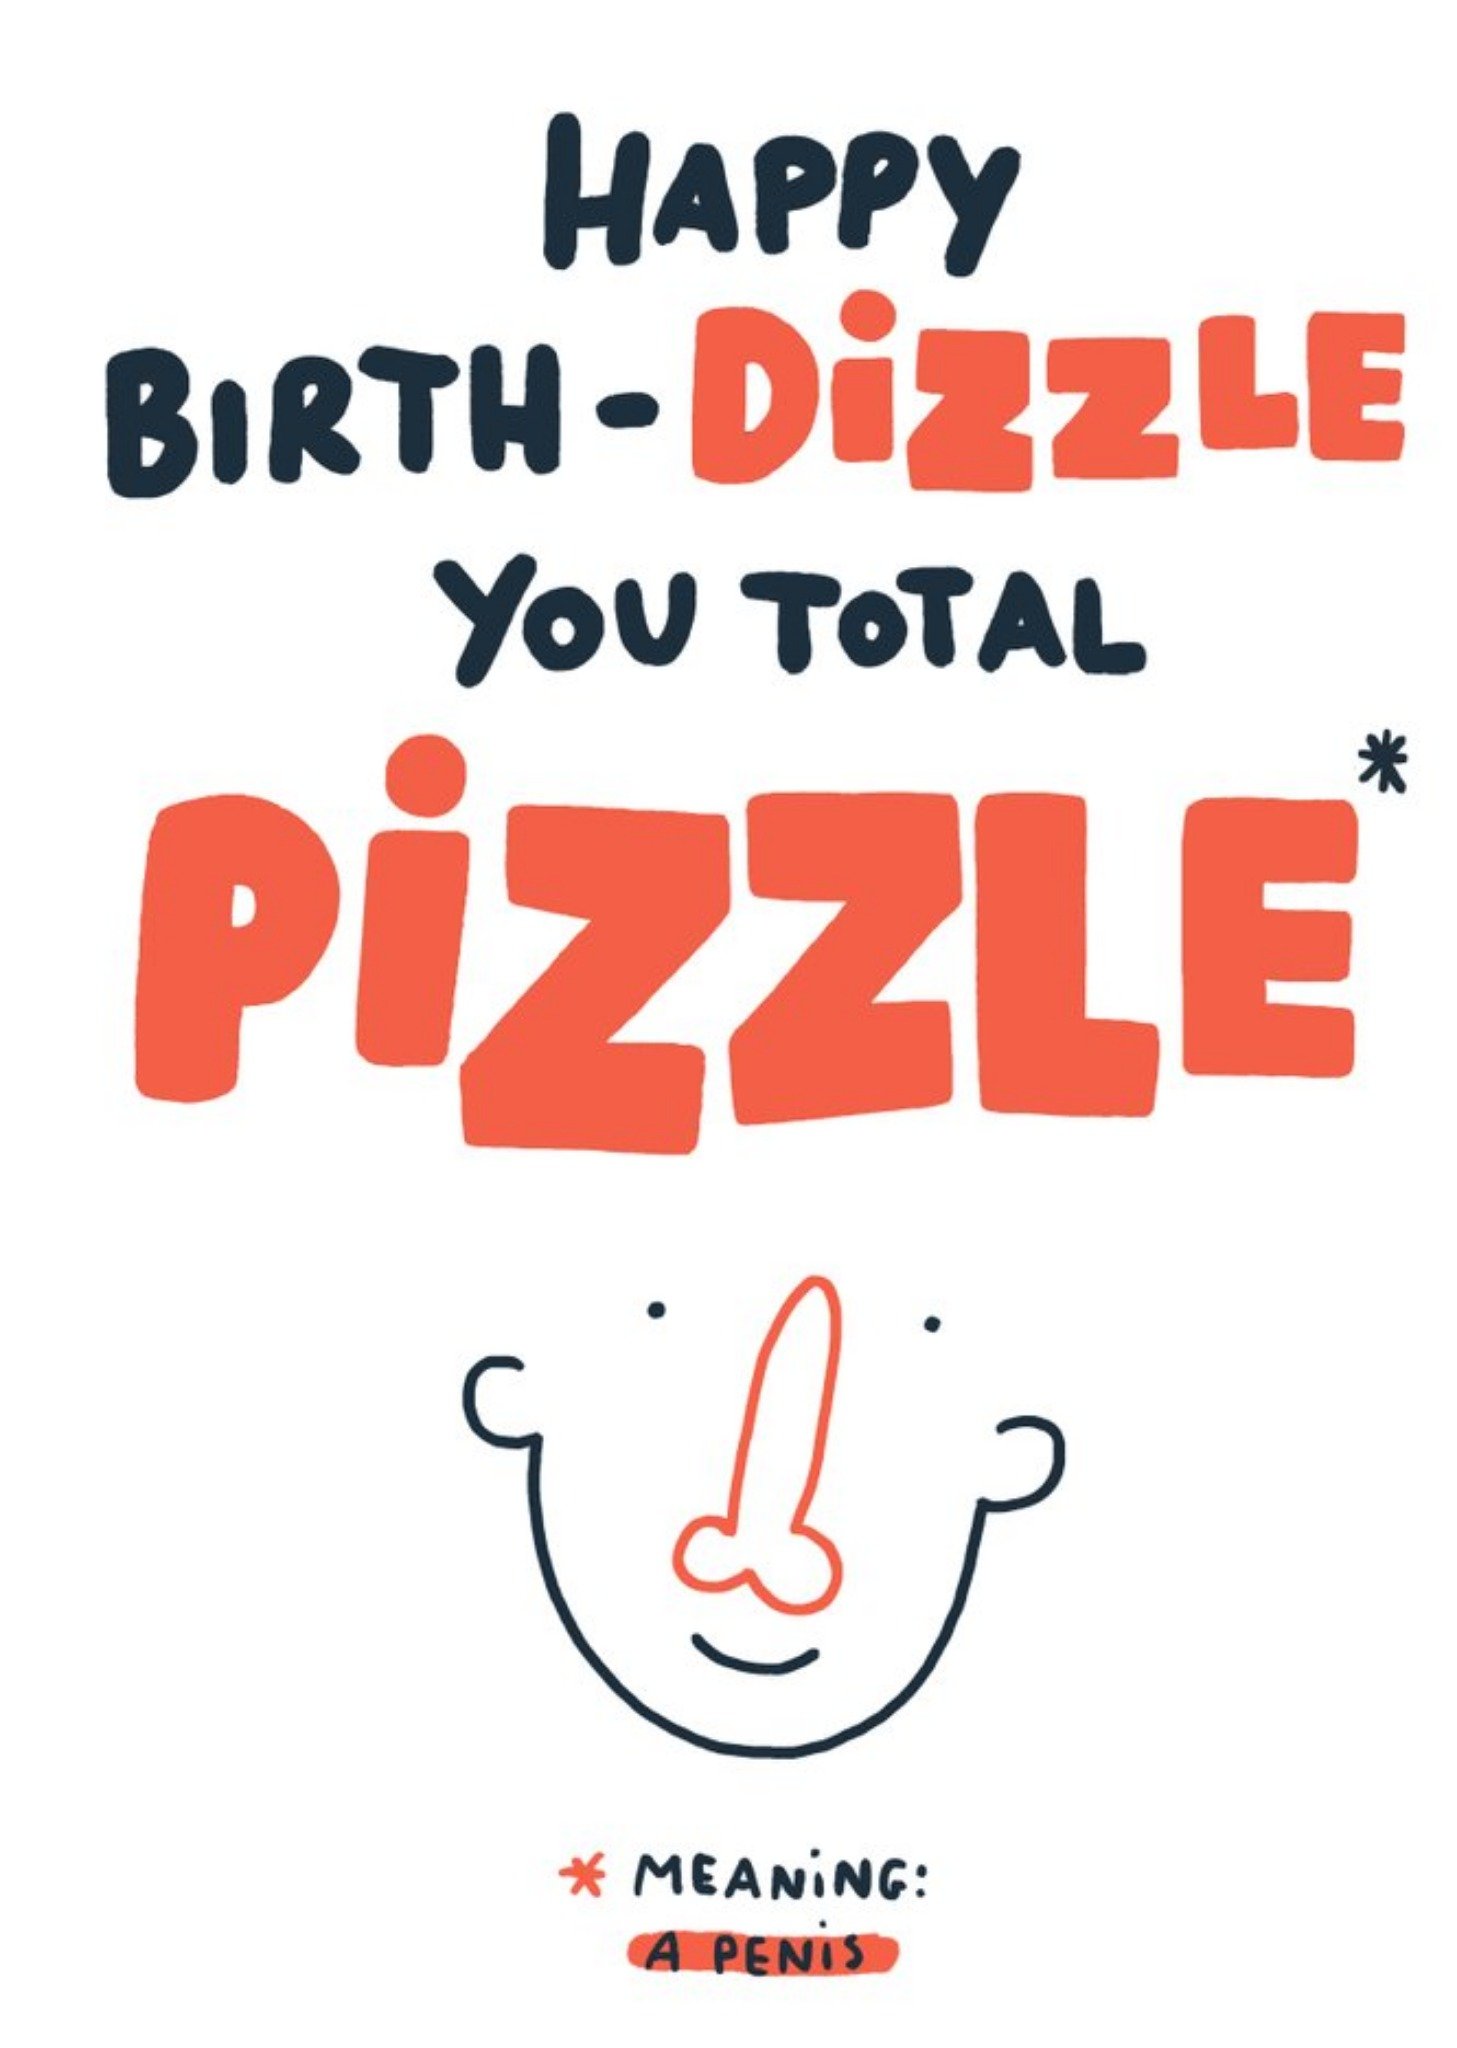 Moonpig Happy Birth Dizzle You Total Pizzle Funny Birthday Card Ecard